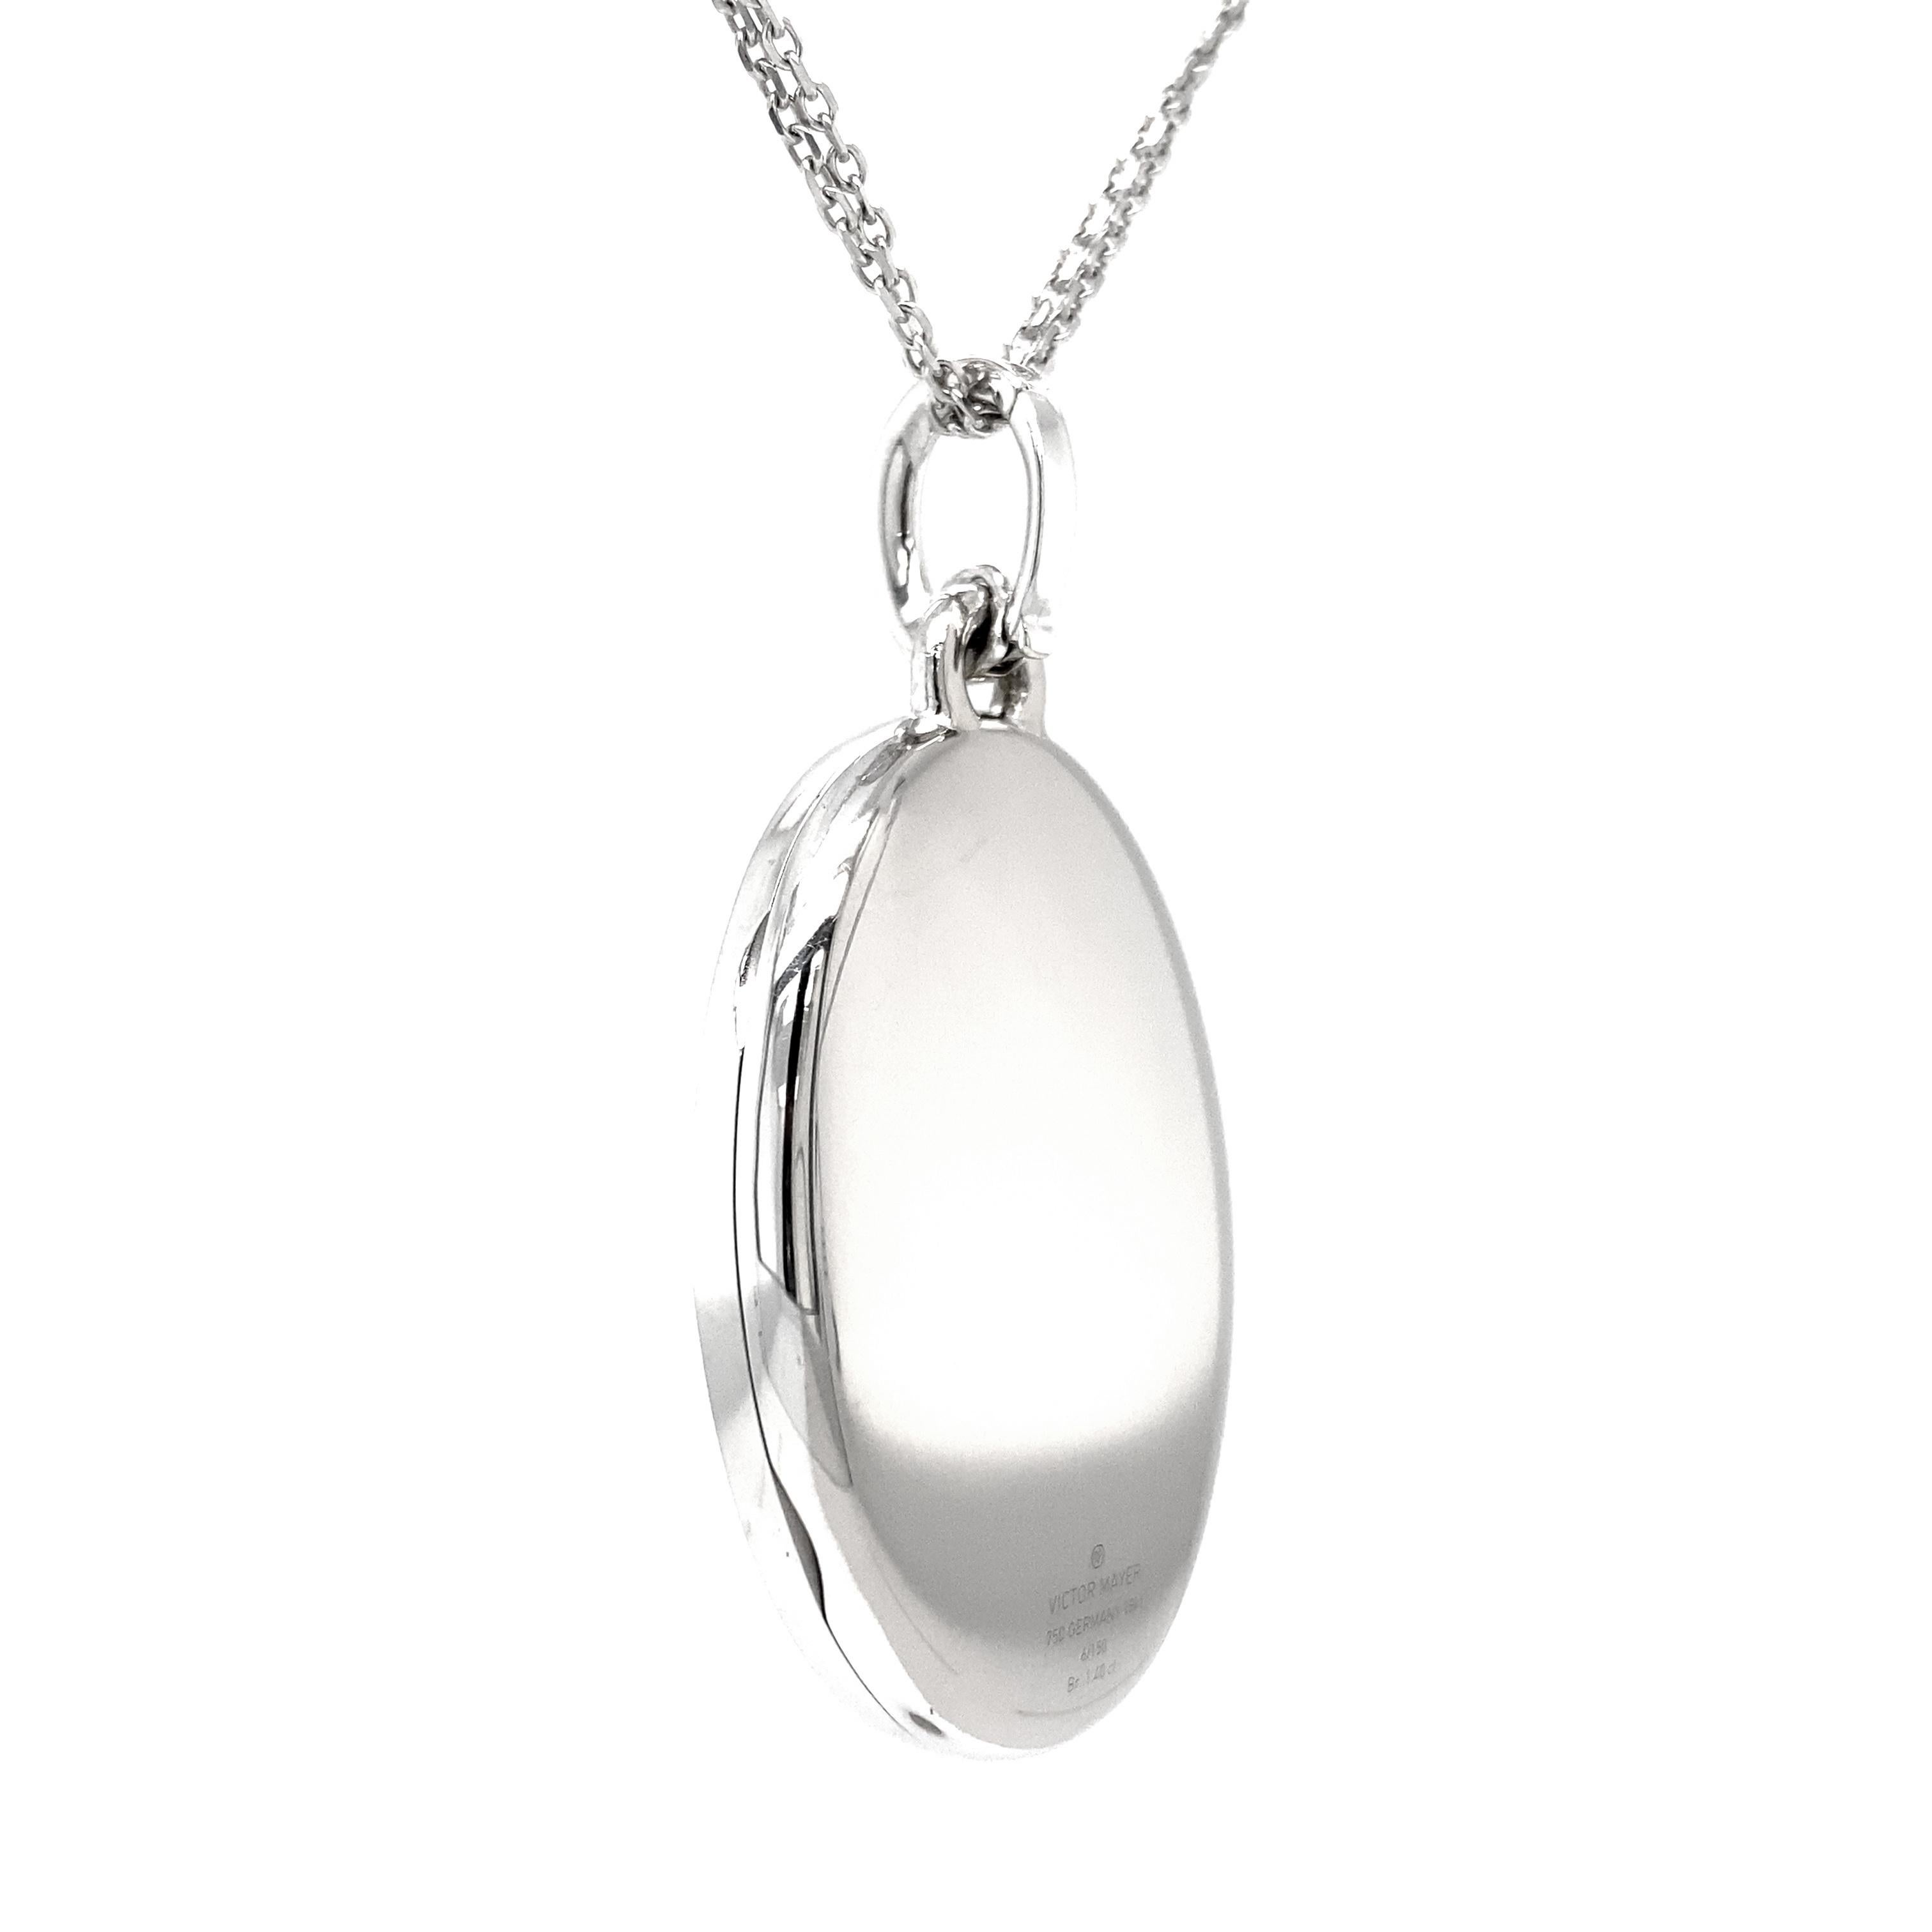 Brilliant Cut Oval Locket Pendant Star Necklace 18k White Gold Pink Enamel 108 Diamonds 1.39ct For Sale